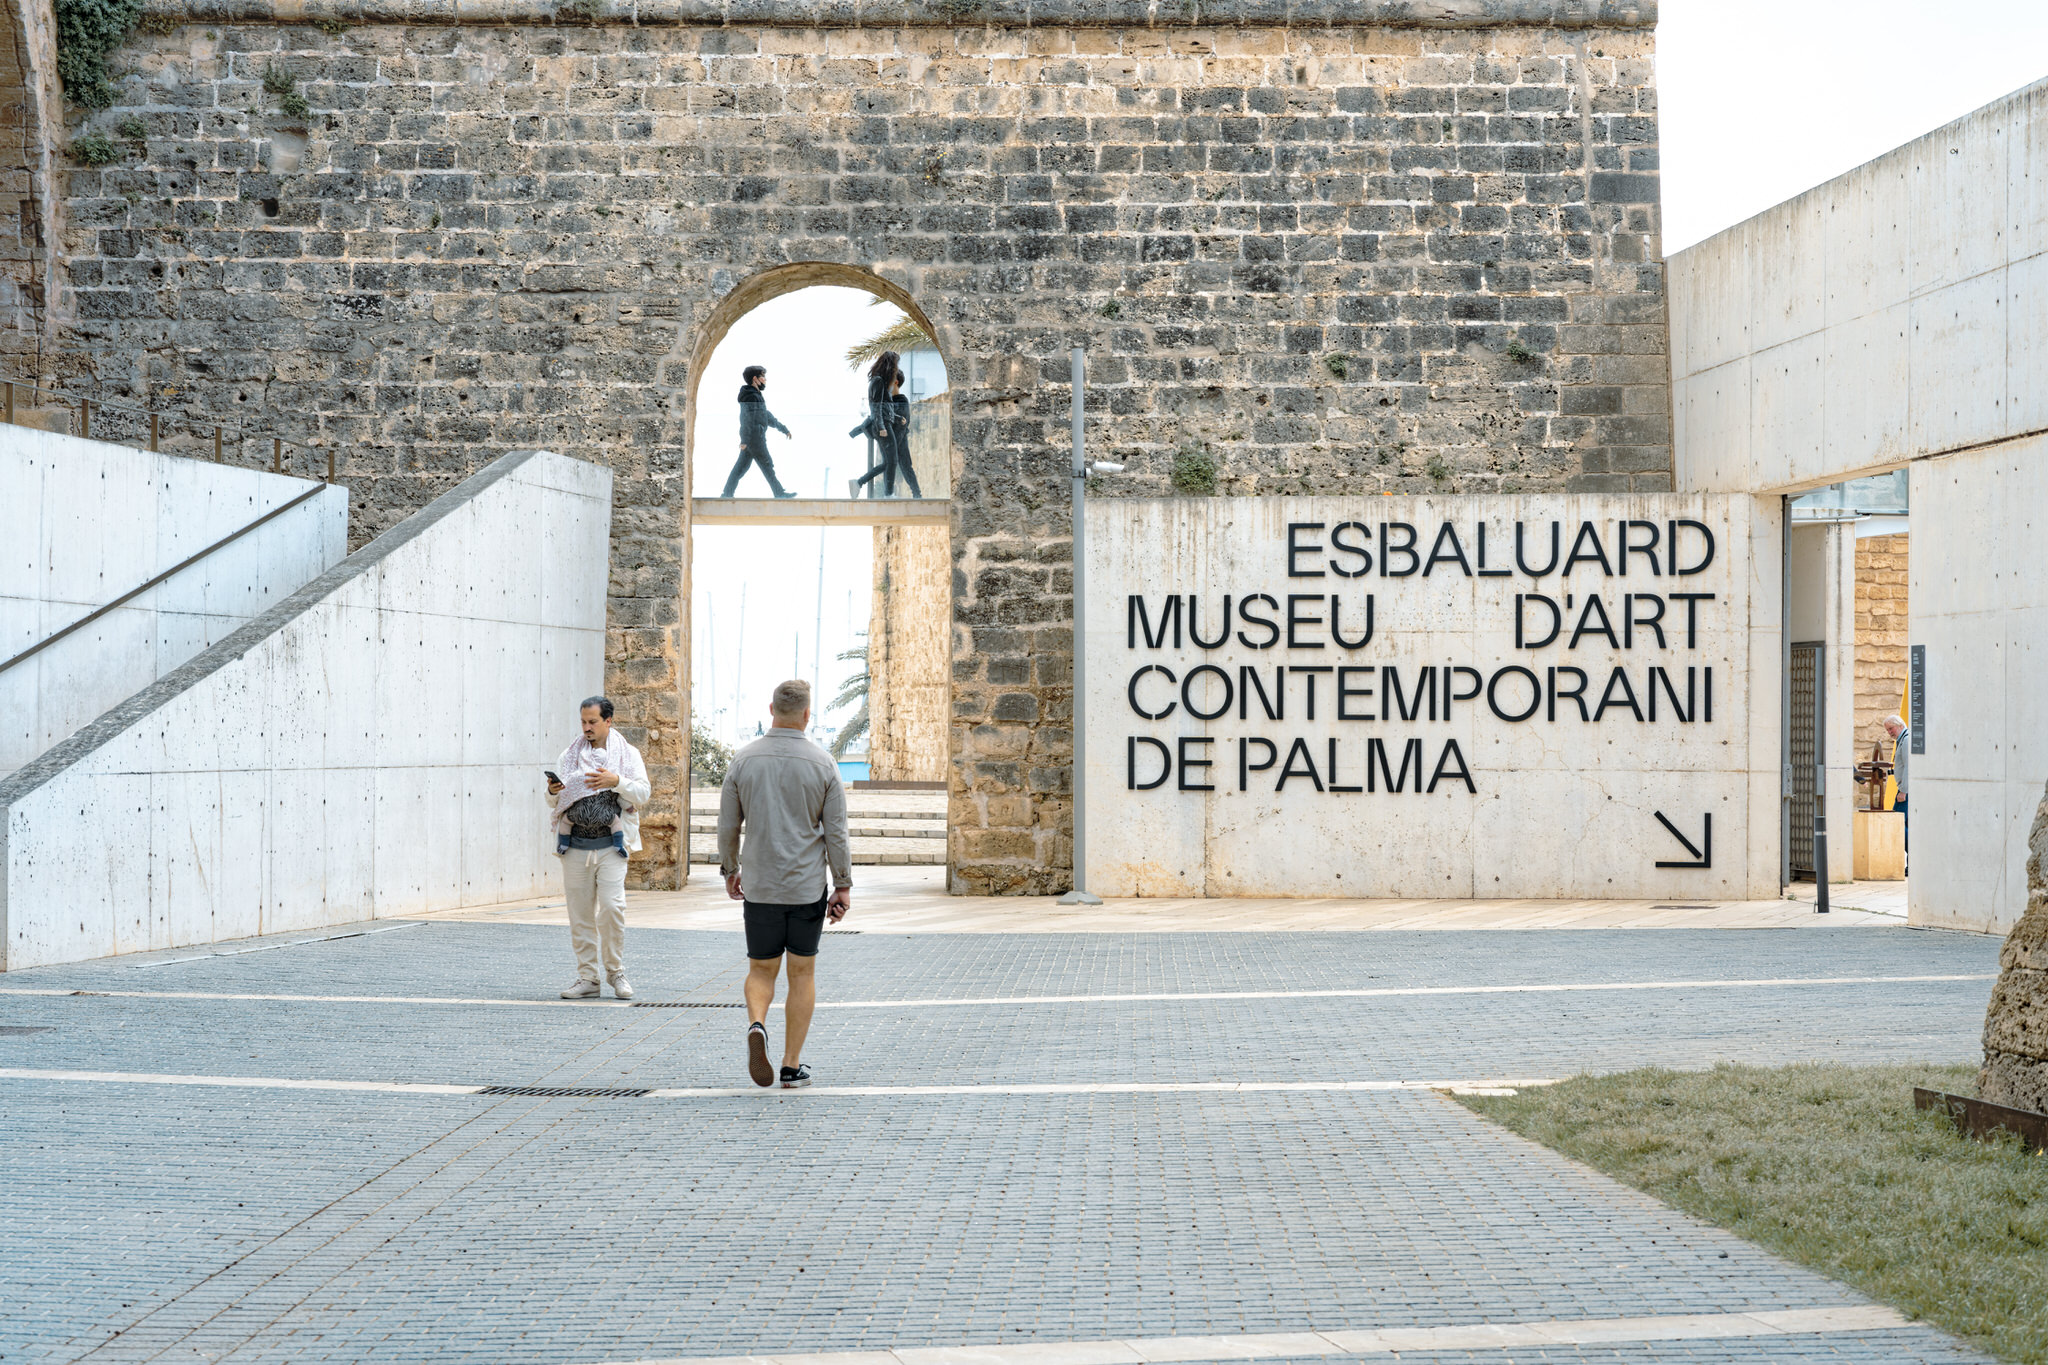 Photograph of the entrance of Es Baluard Museu D'art Contemporani de Palma